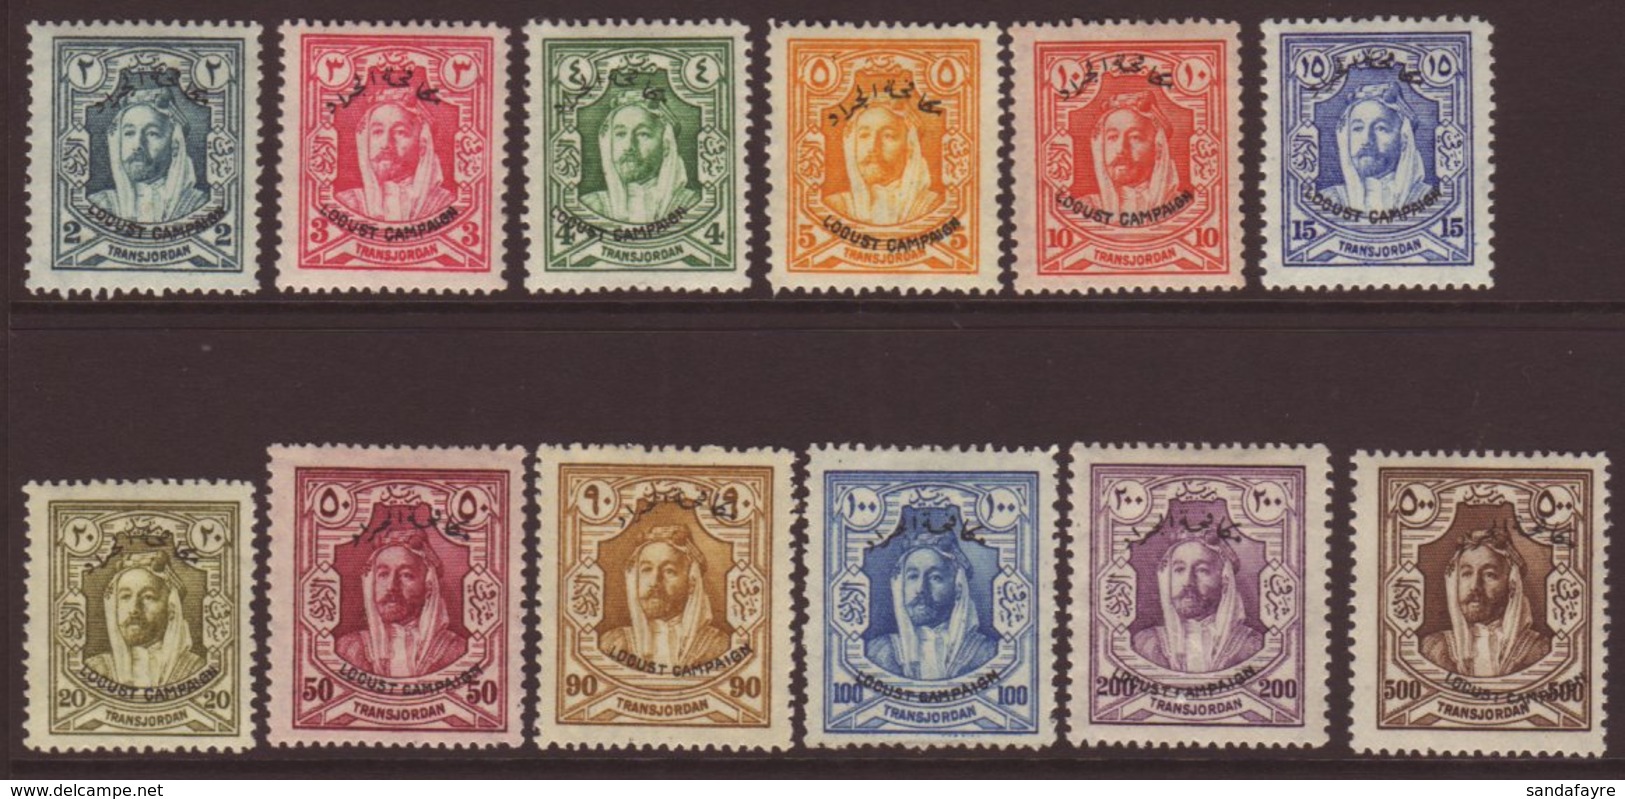 1930 Locust Campaign Overprints Complete Set, SG 183/94, Very Fine Mint, Fresh. (12 Stamps) For More Images, Please Visi - Jordan